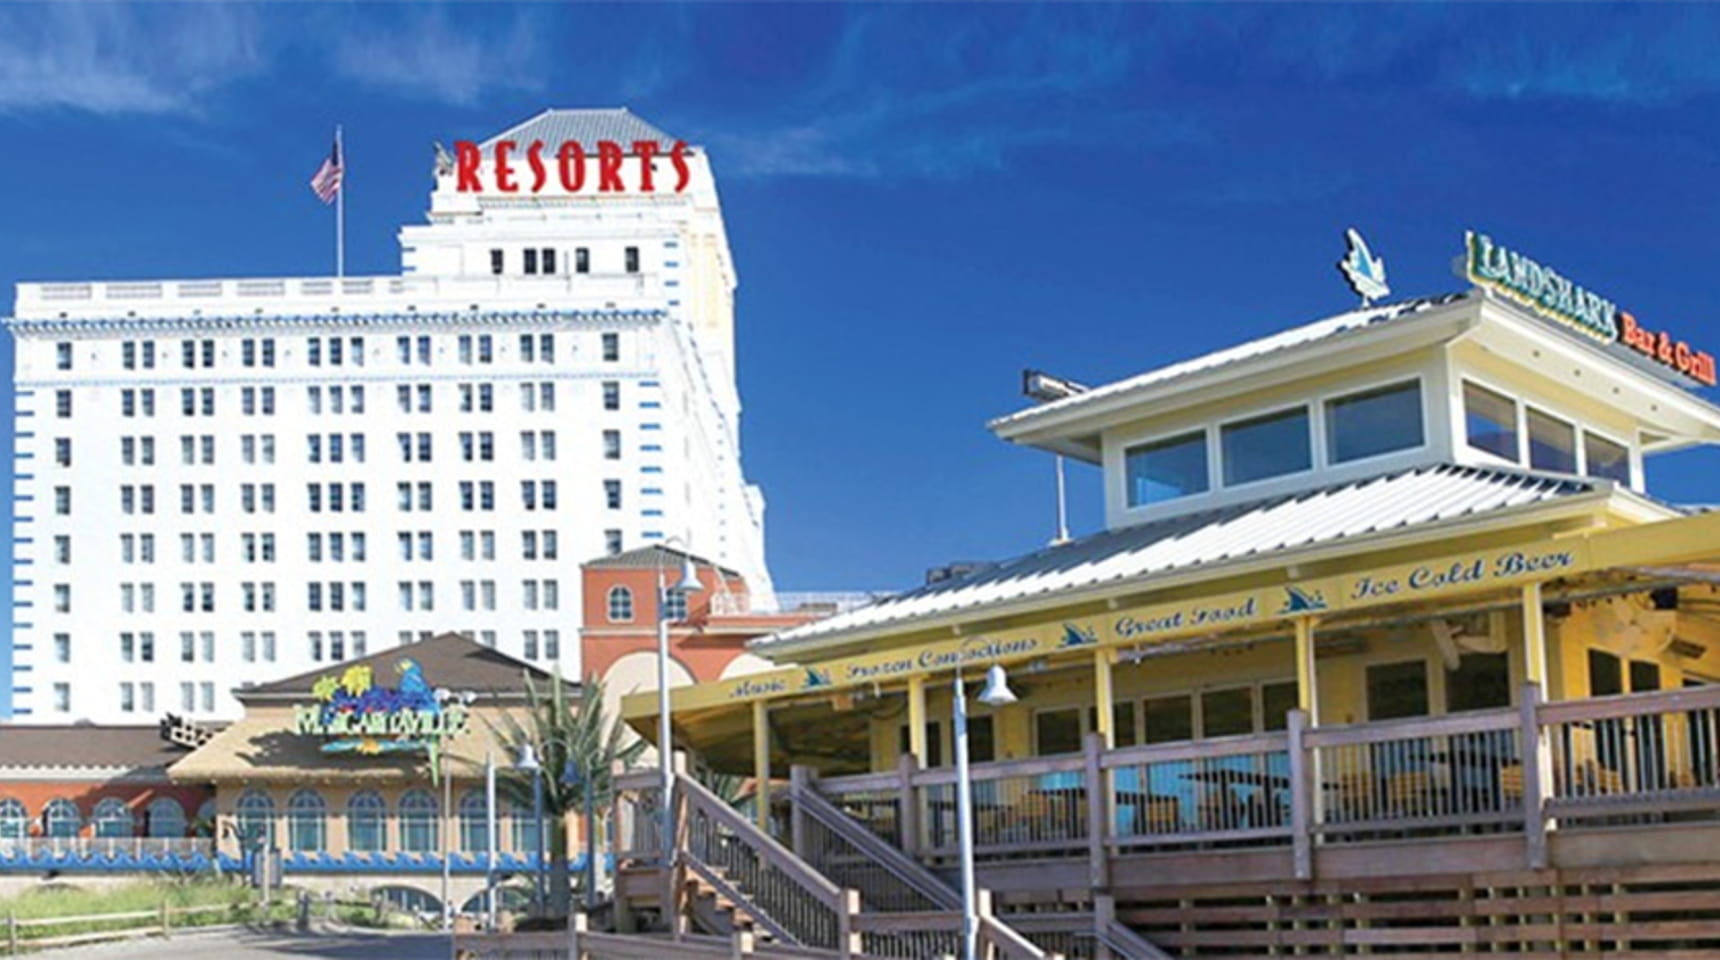 atlantic city resorts hotel and casino